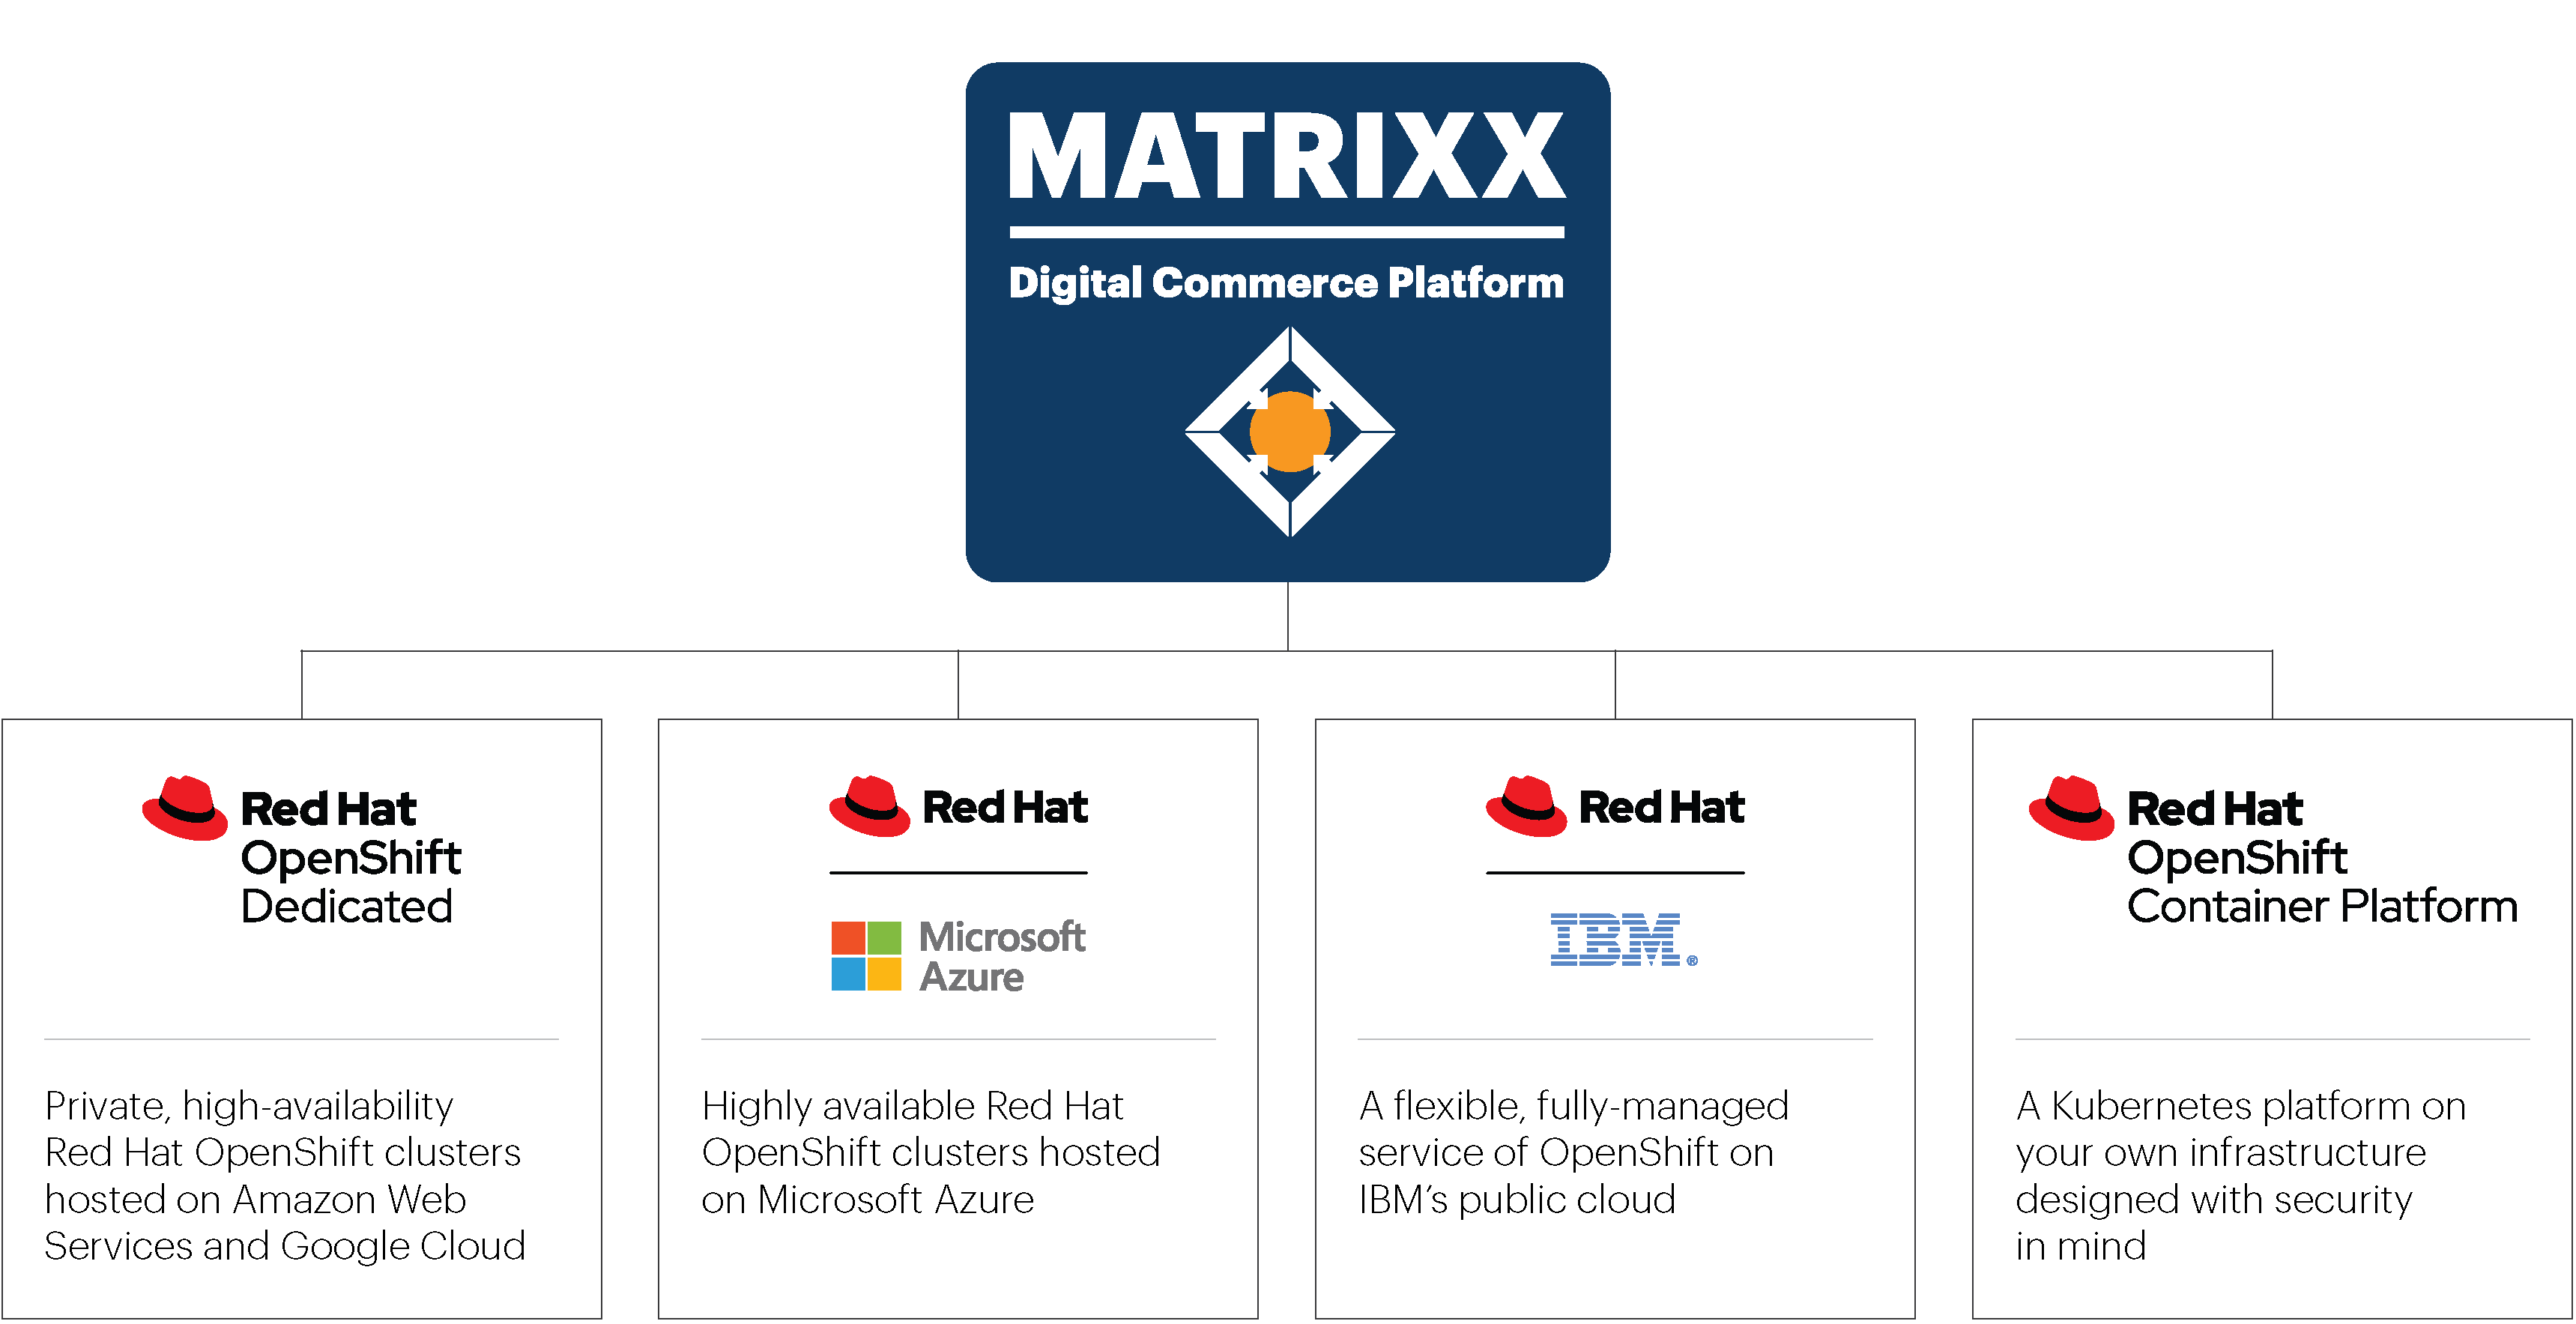 MATRIXX deployment with Red Hat